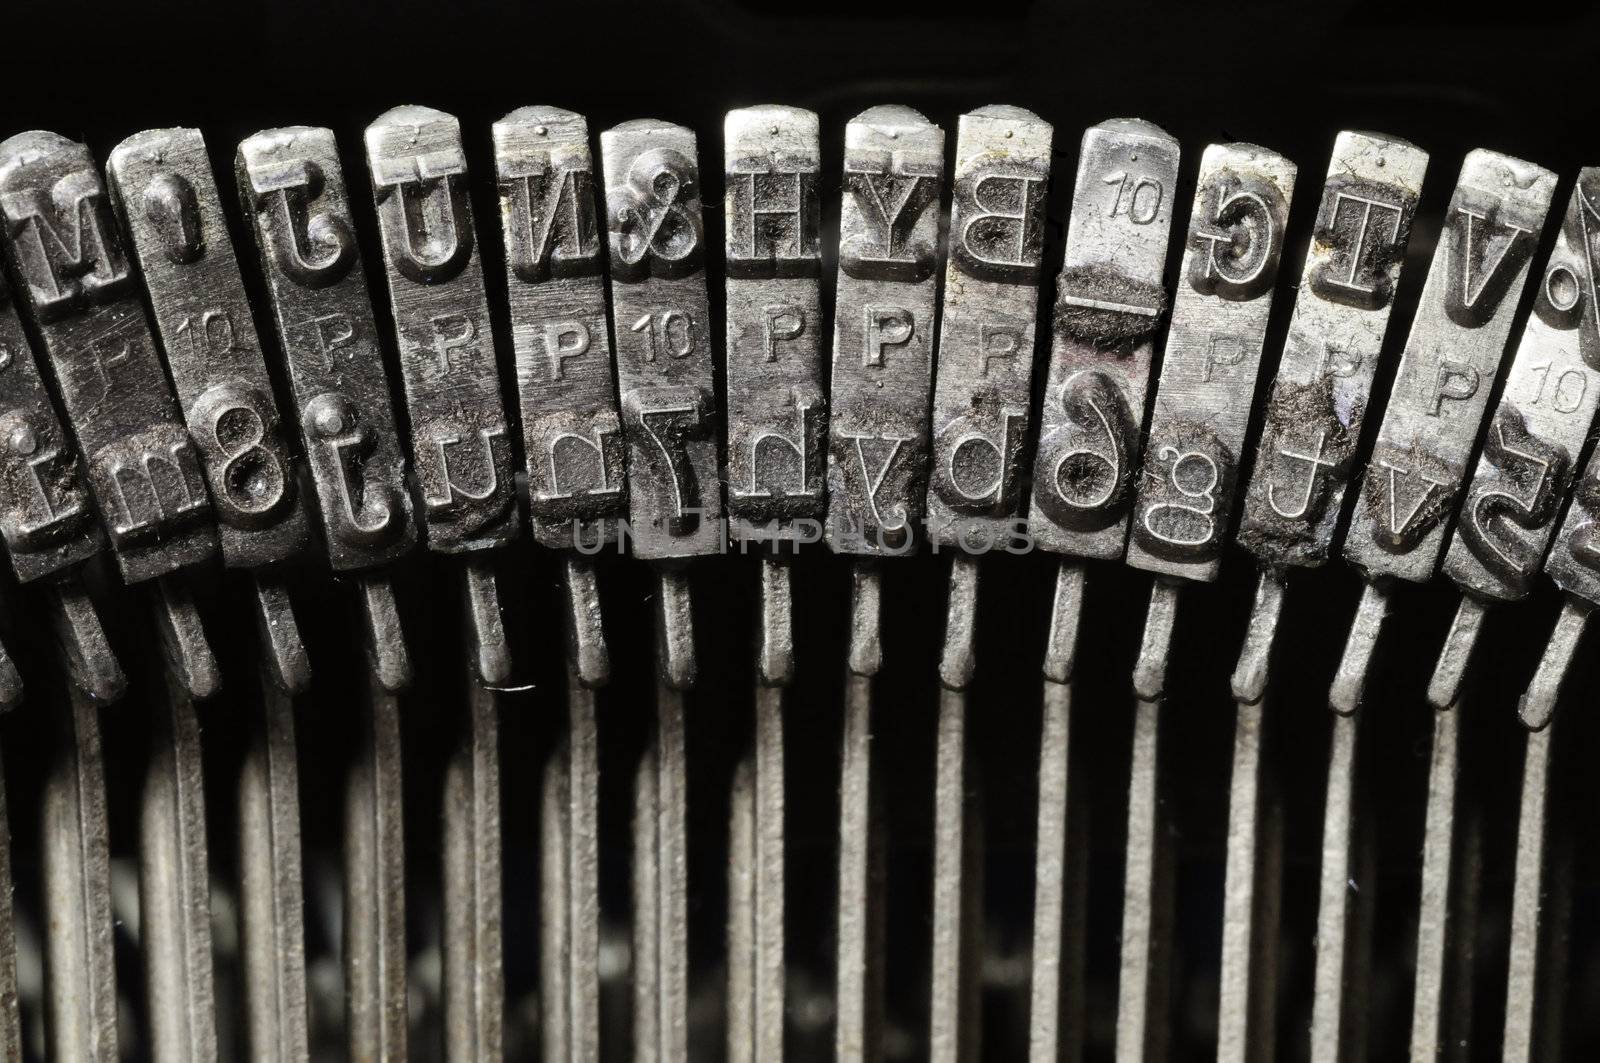 Close-up of old typewriter letter and symbol keys